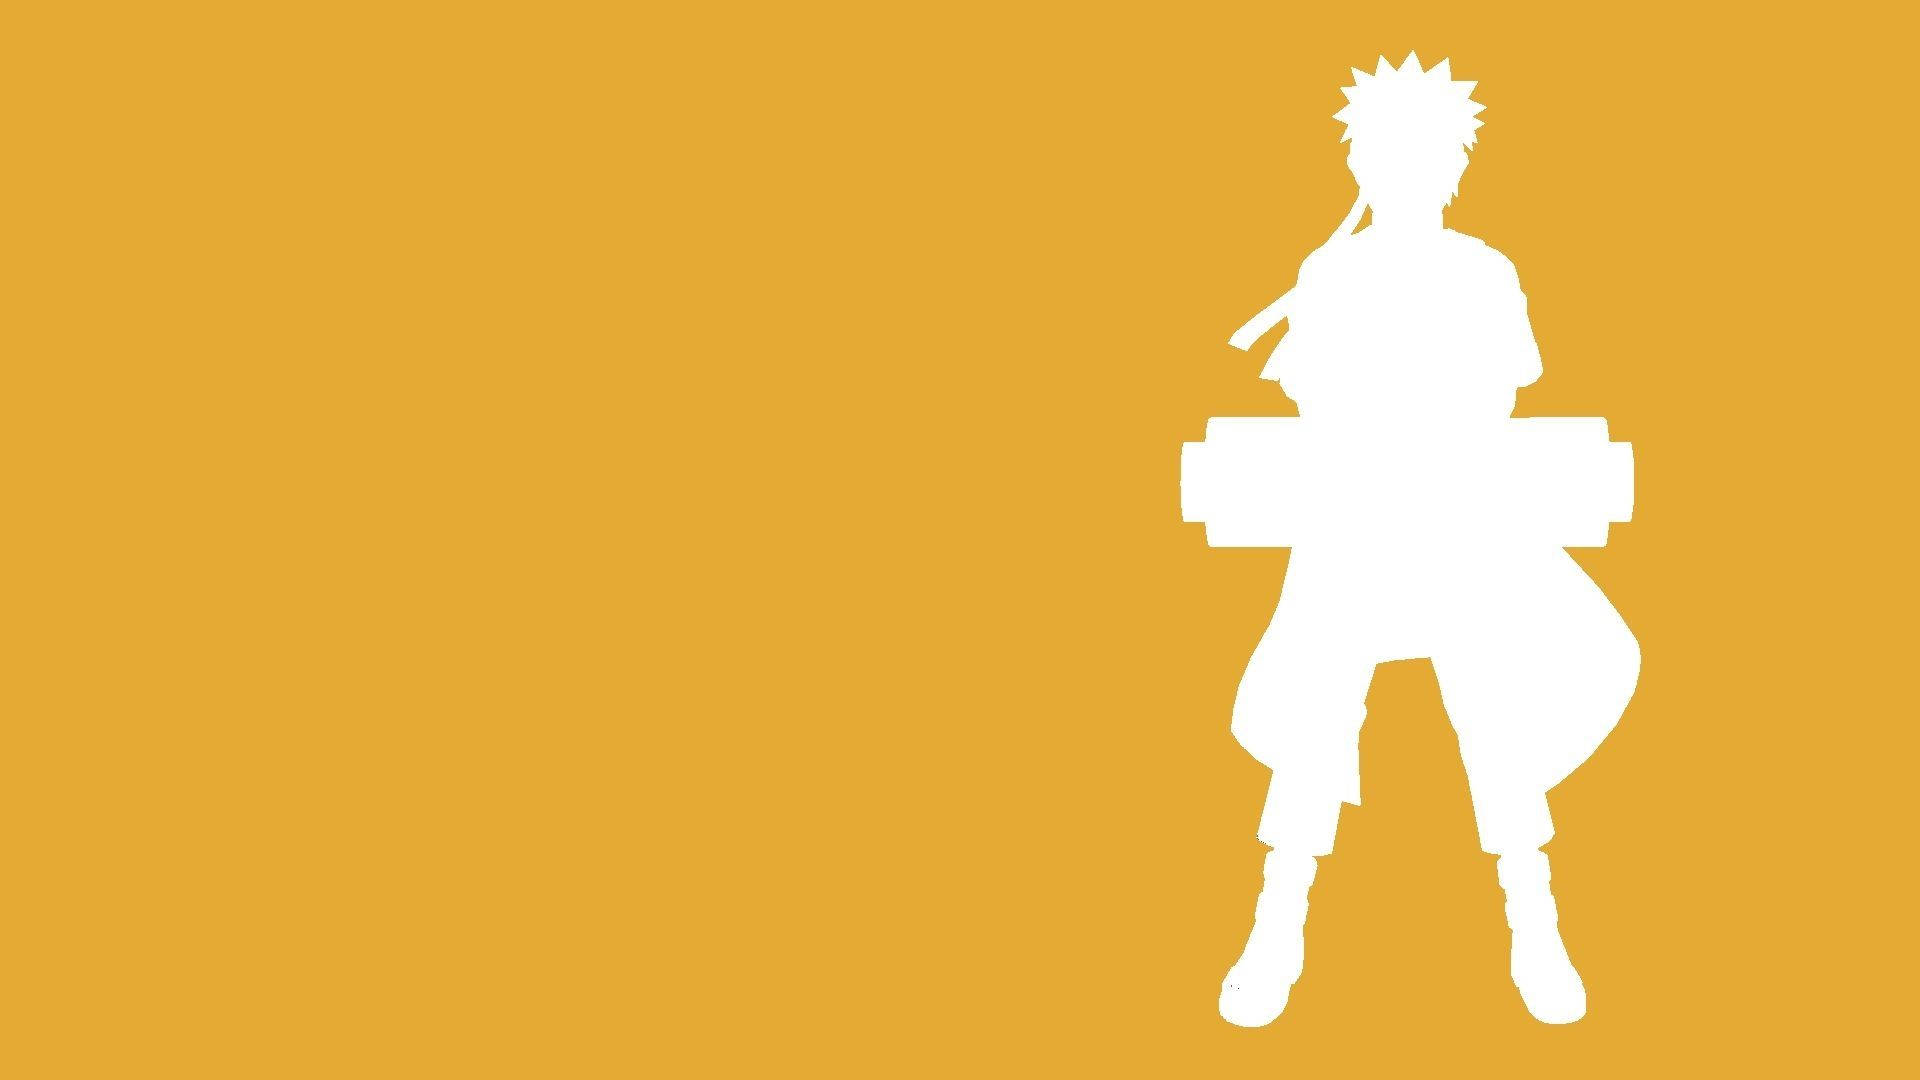 Naruto Uzumaki iført sit livlige gule kostume pryder denne tapet. Wallpaper